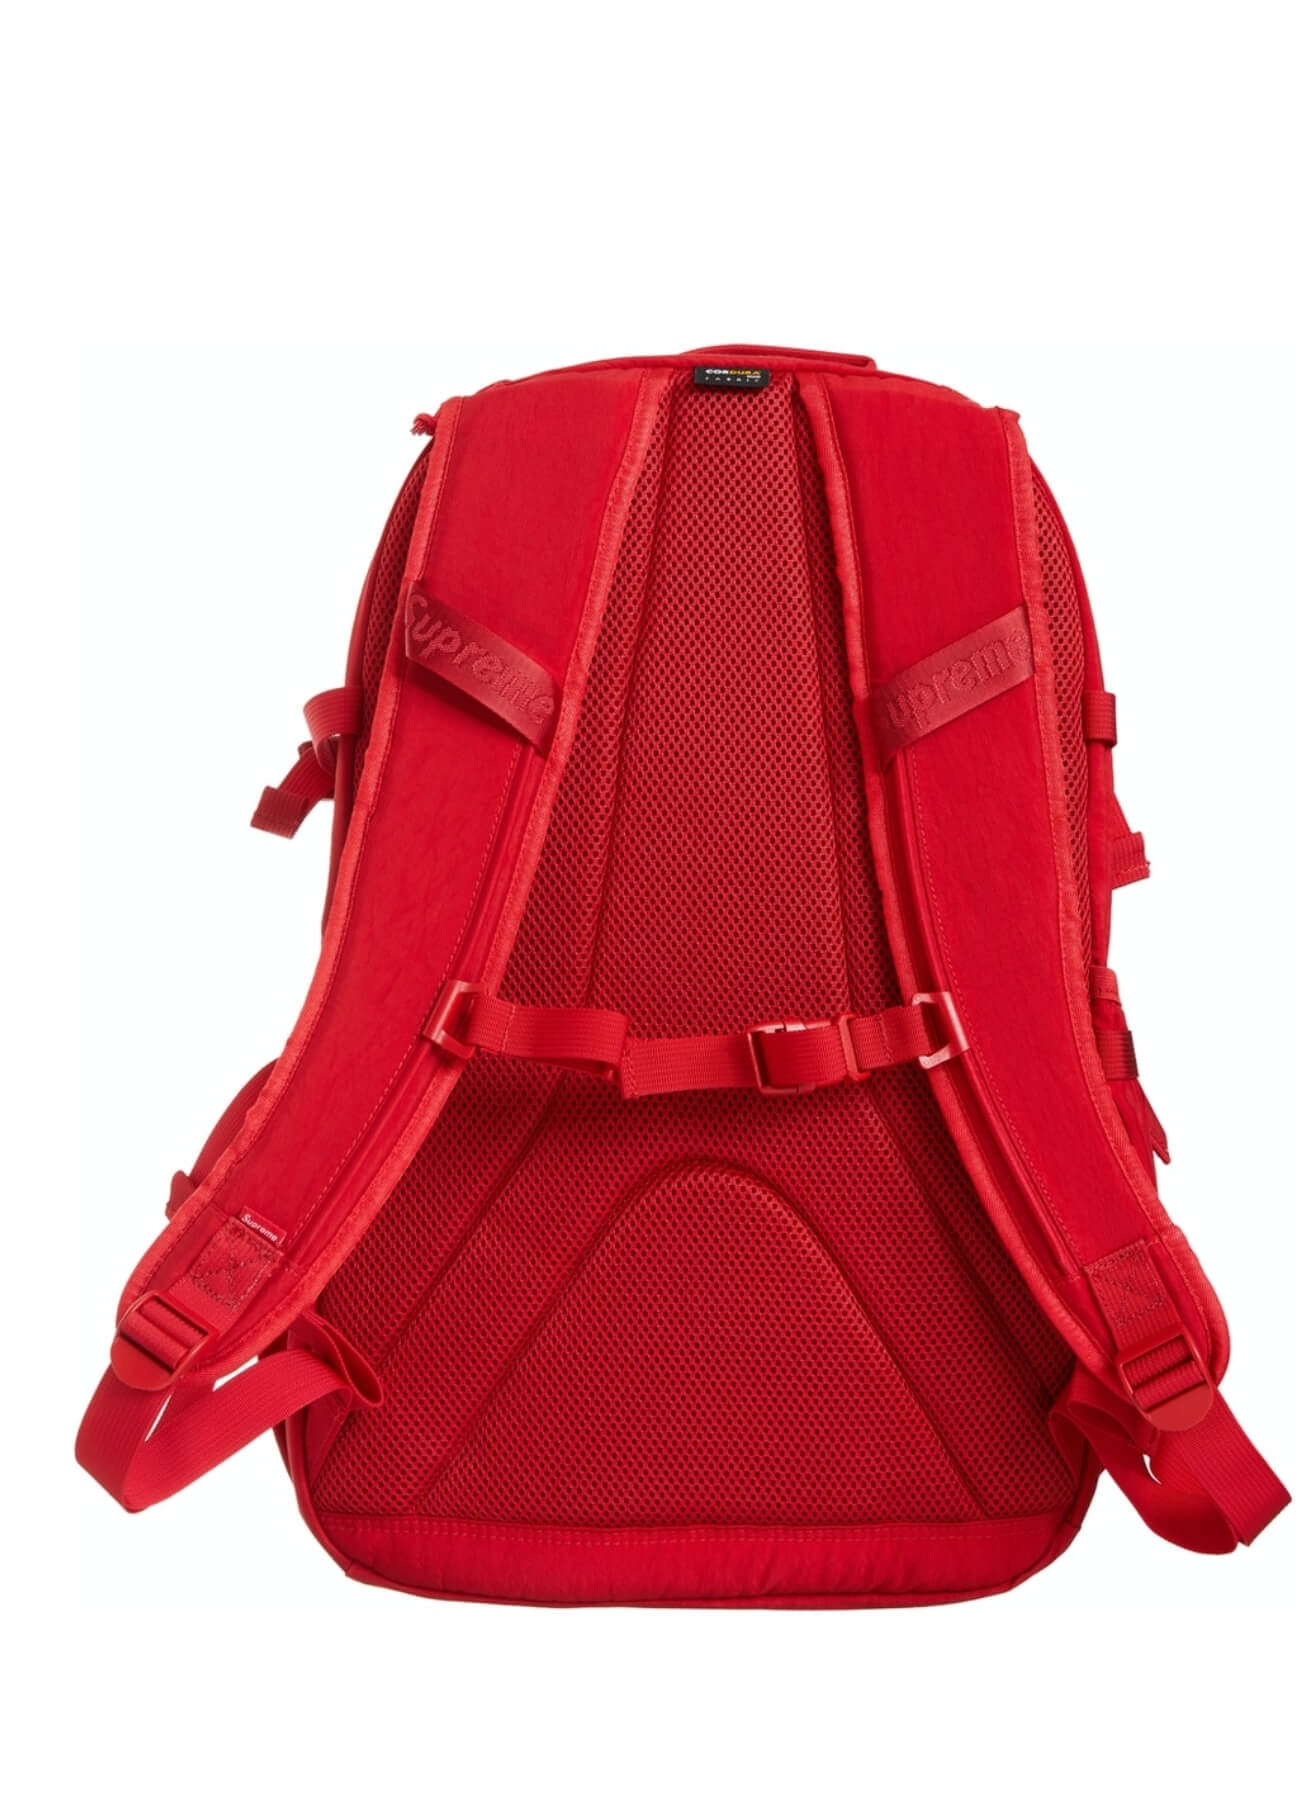 supreme red backpack 2